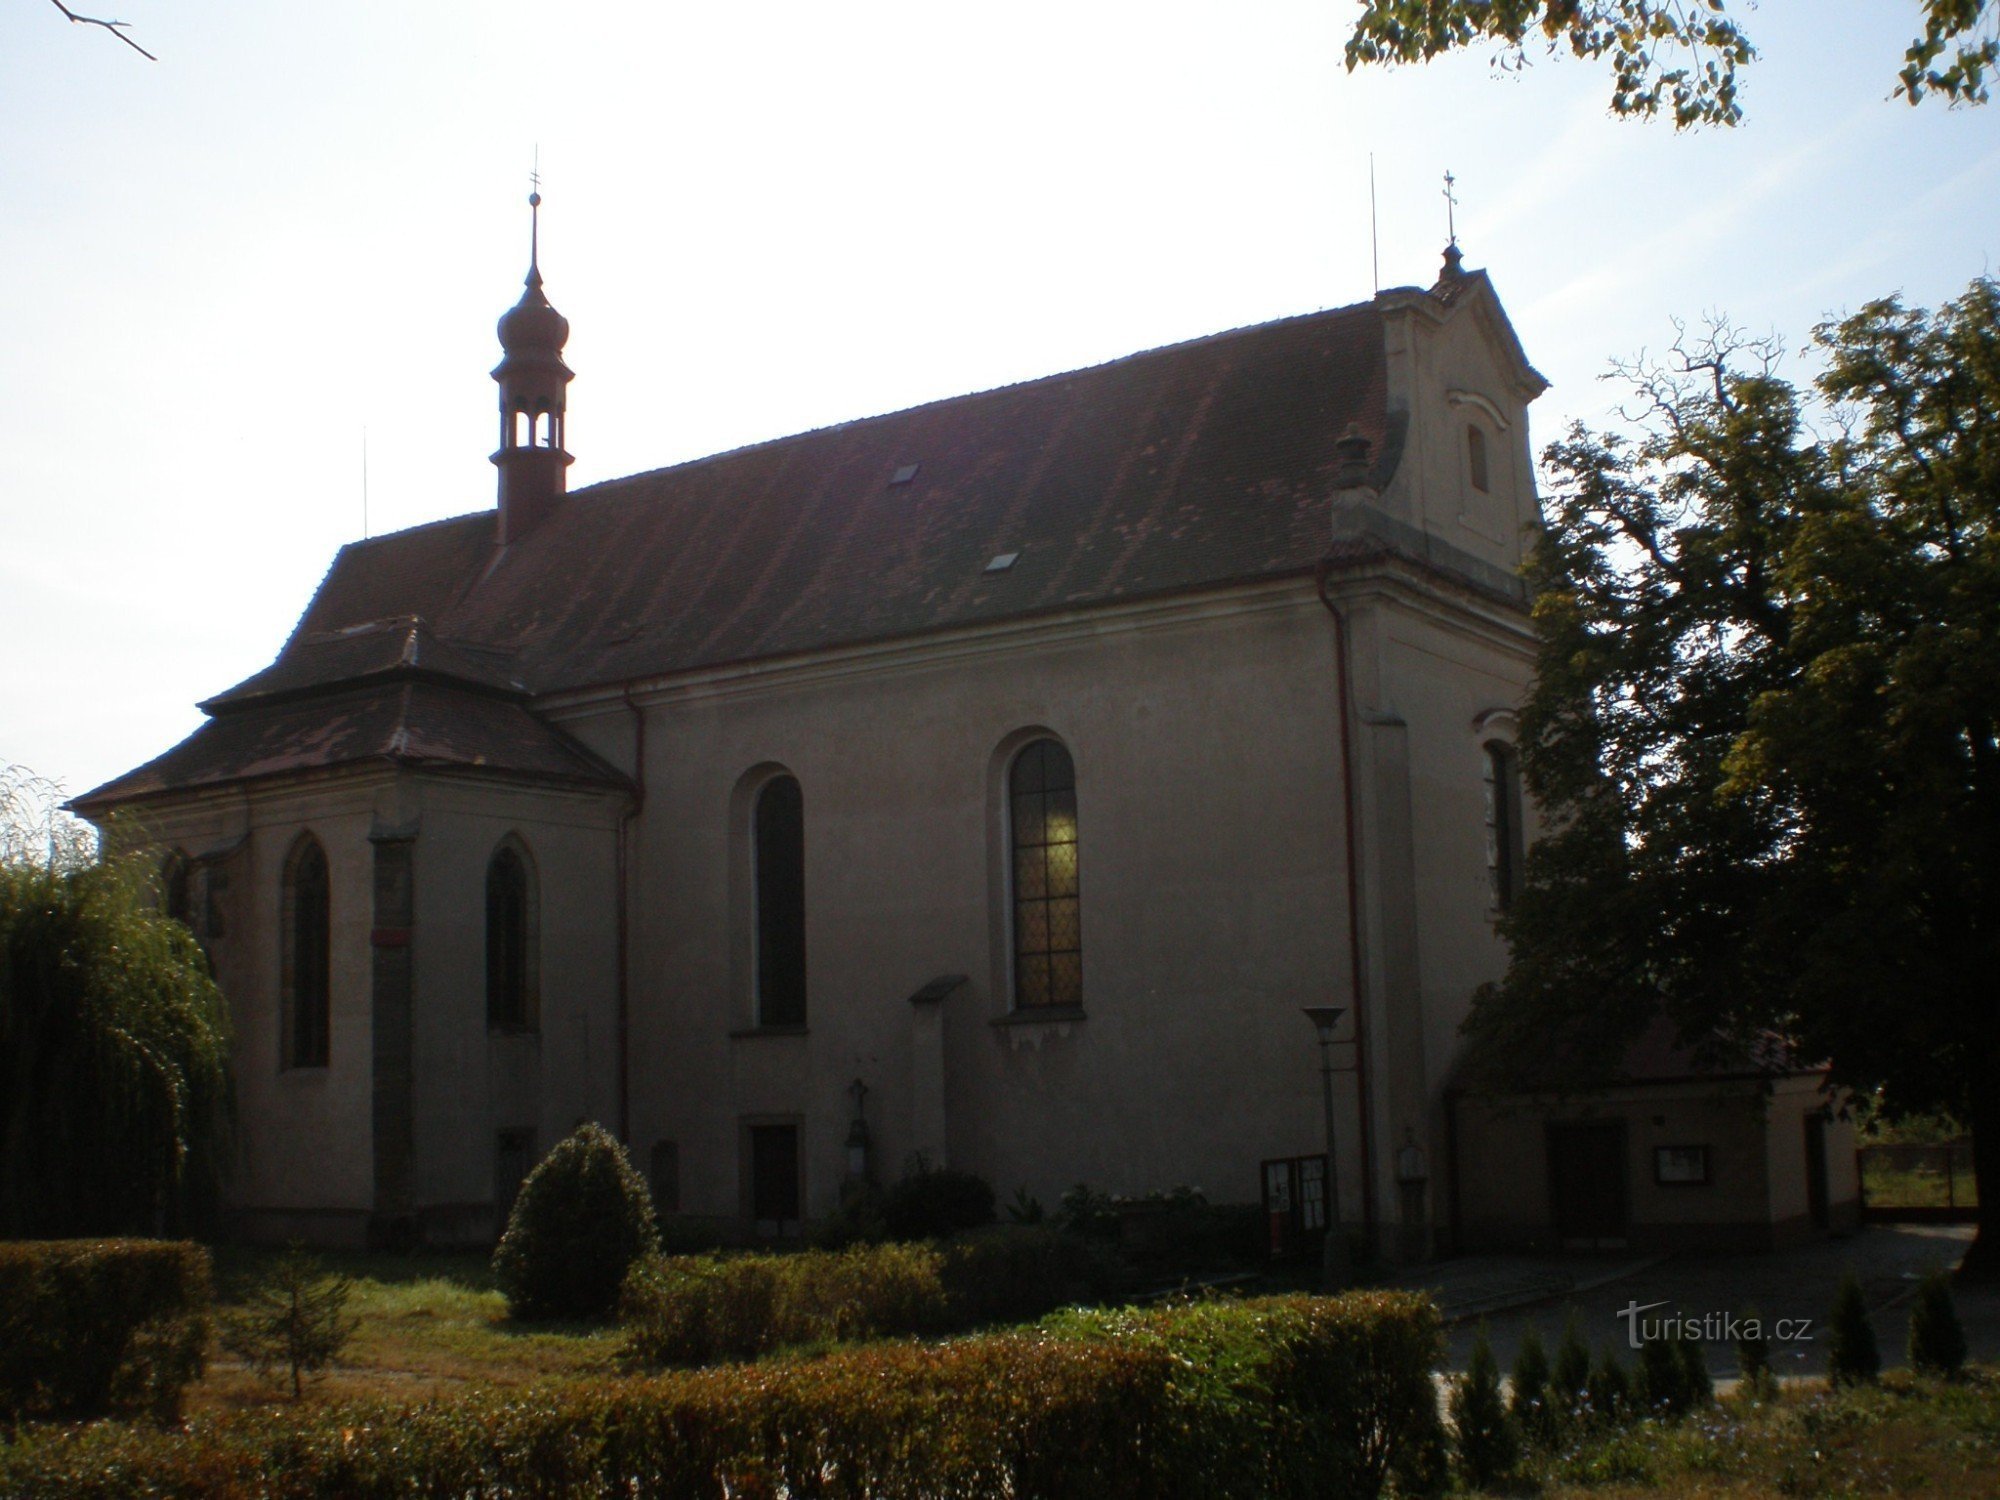 Sezemice - Nhà thờ St. Trinity